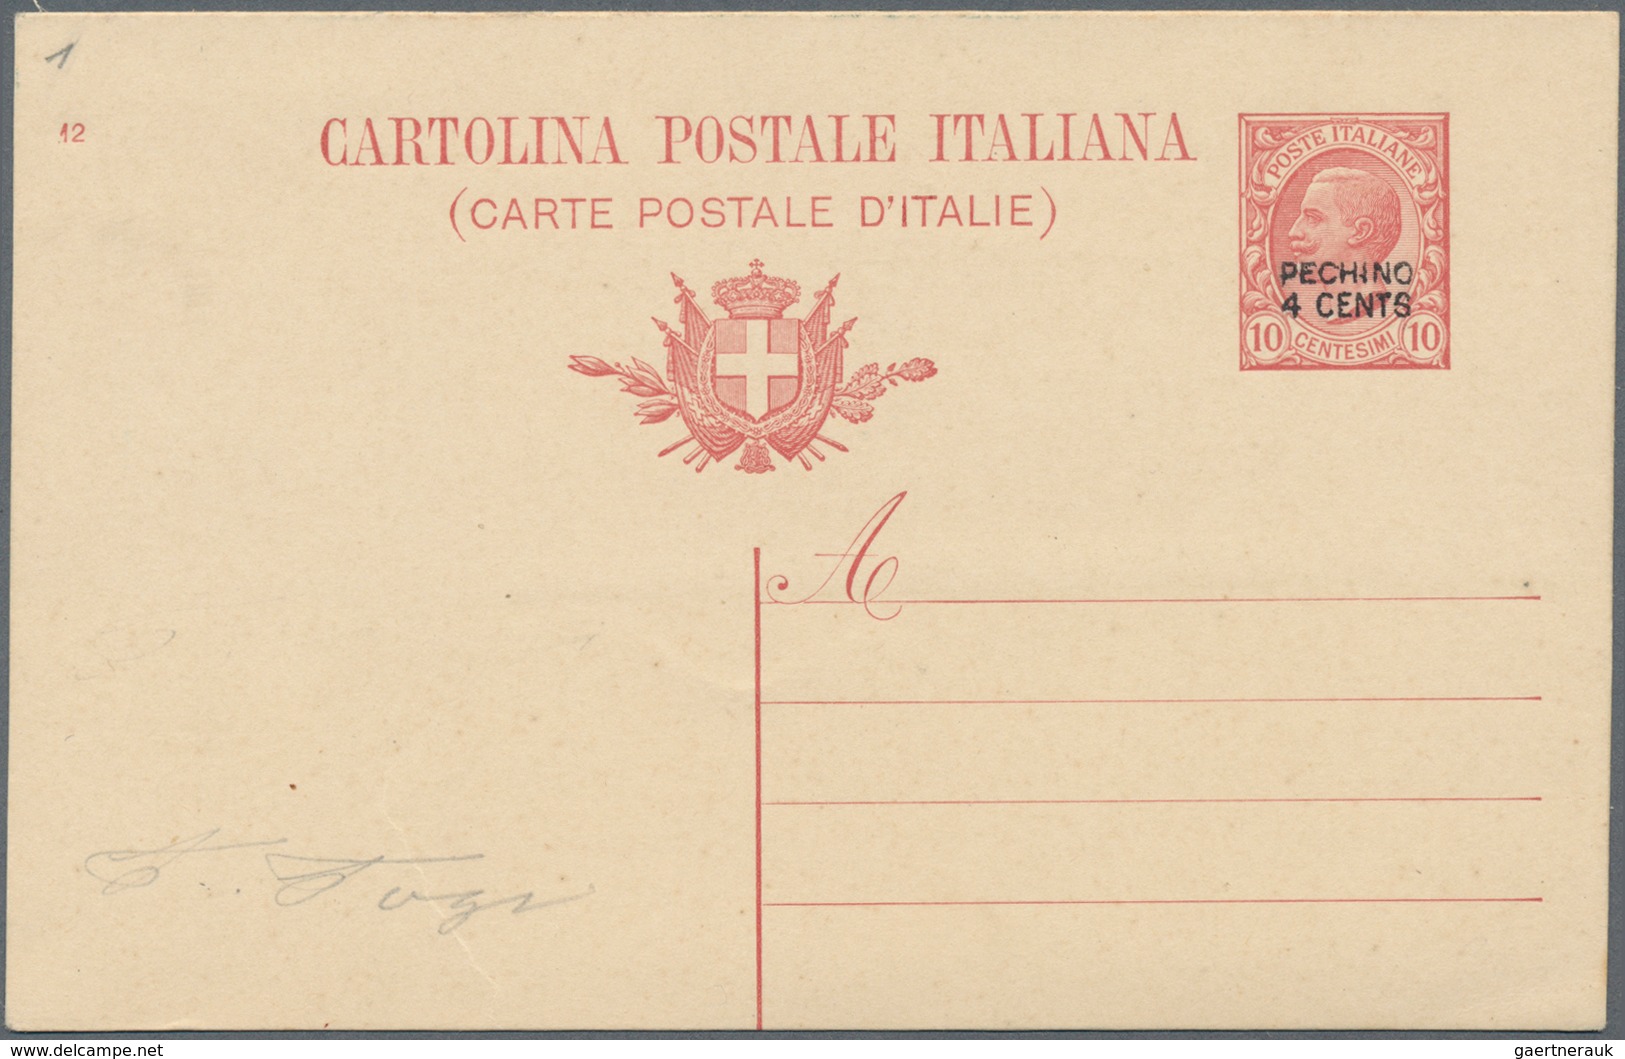 Italienische Post In China: 1917: Italian 10 C "Leoni" With Hand Overprint " PECHINO 4 CENTS", Fine - Tientsin